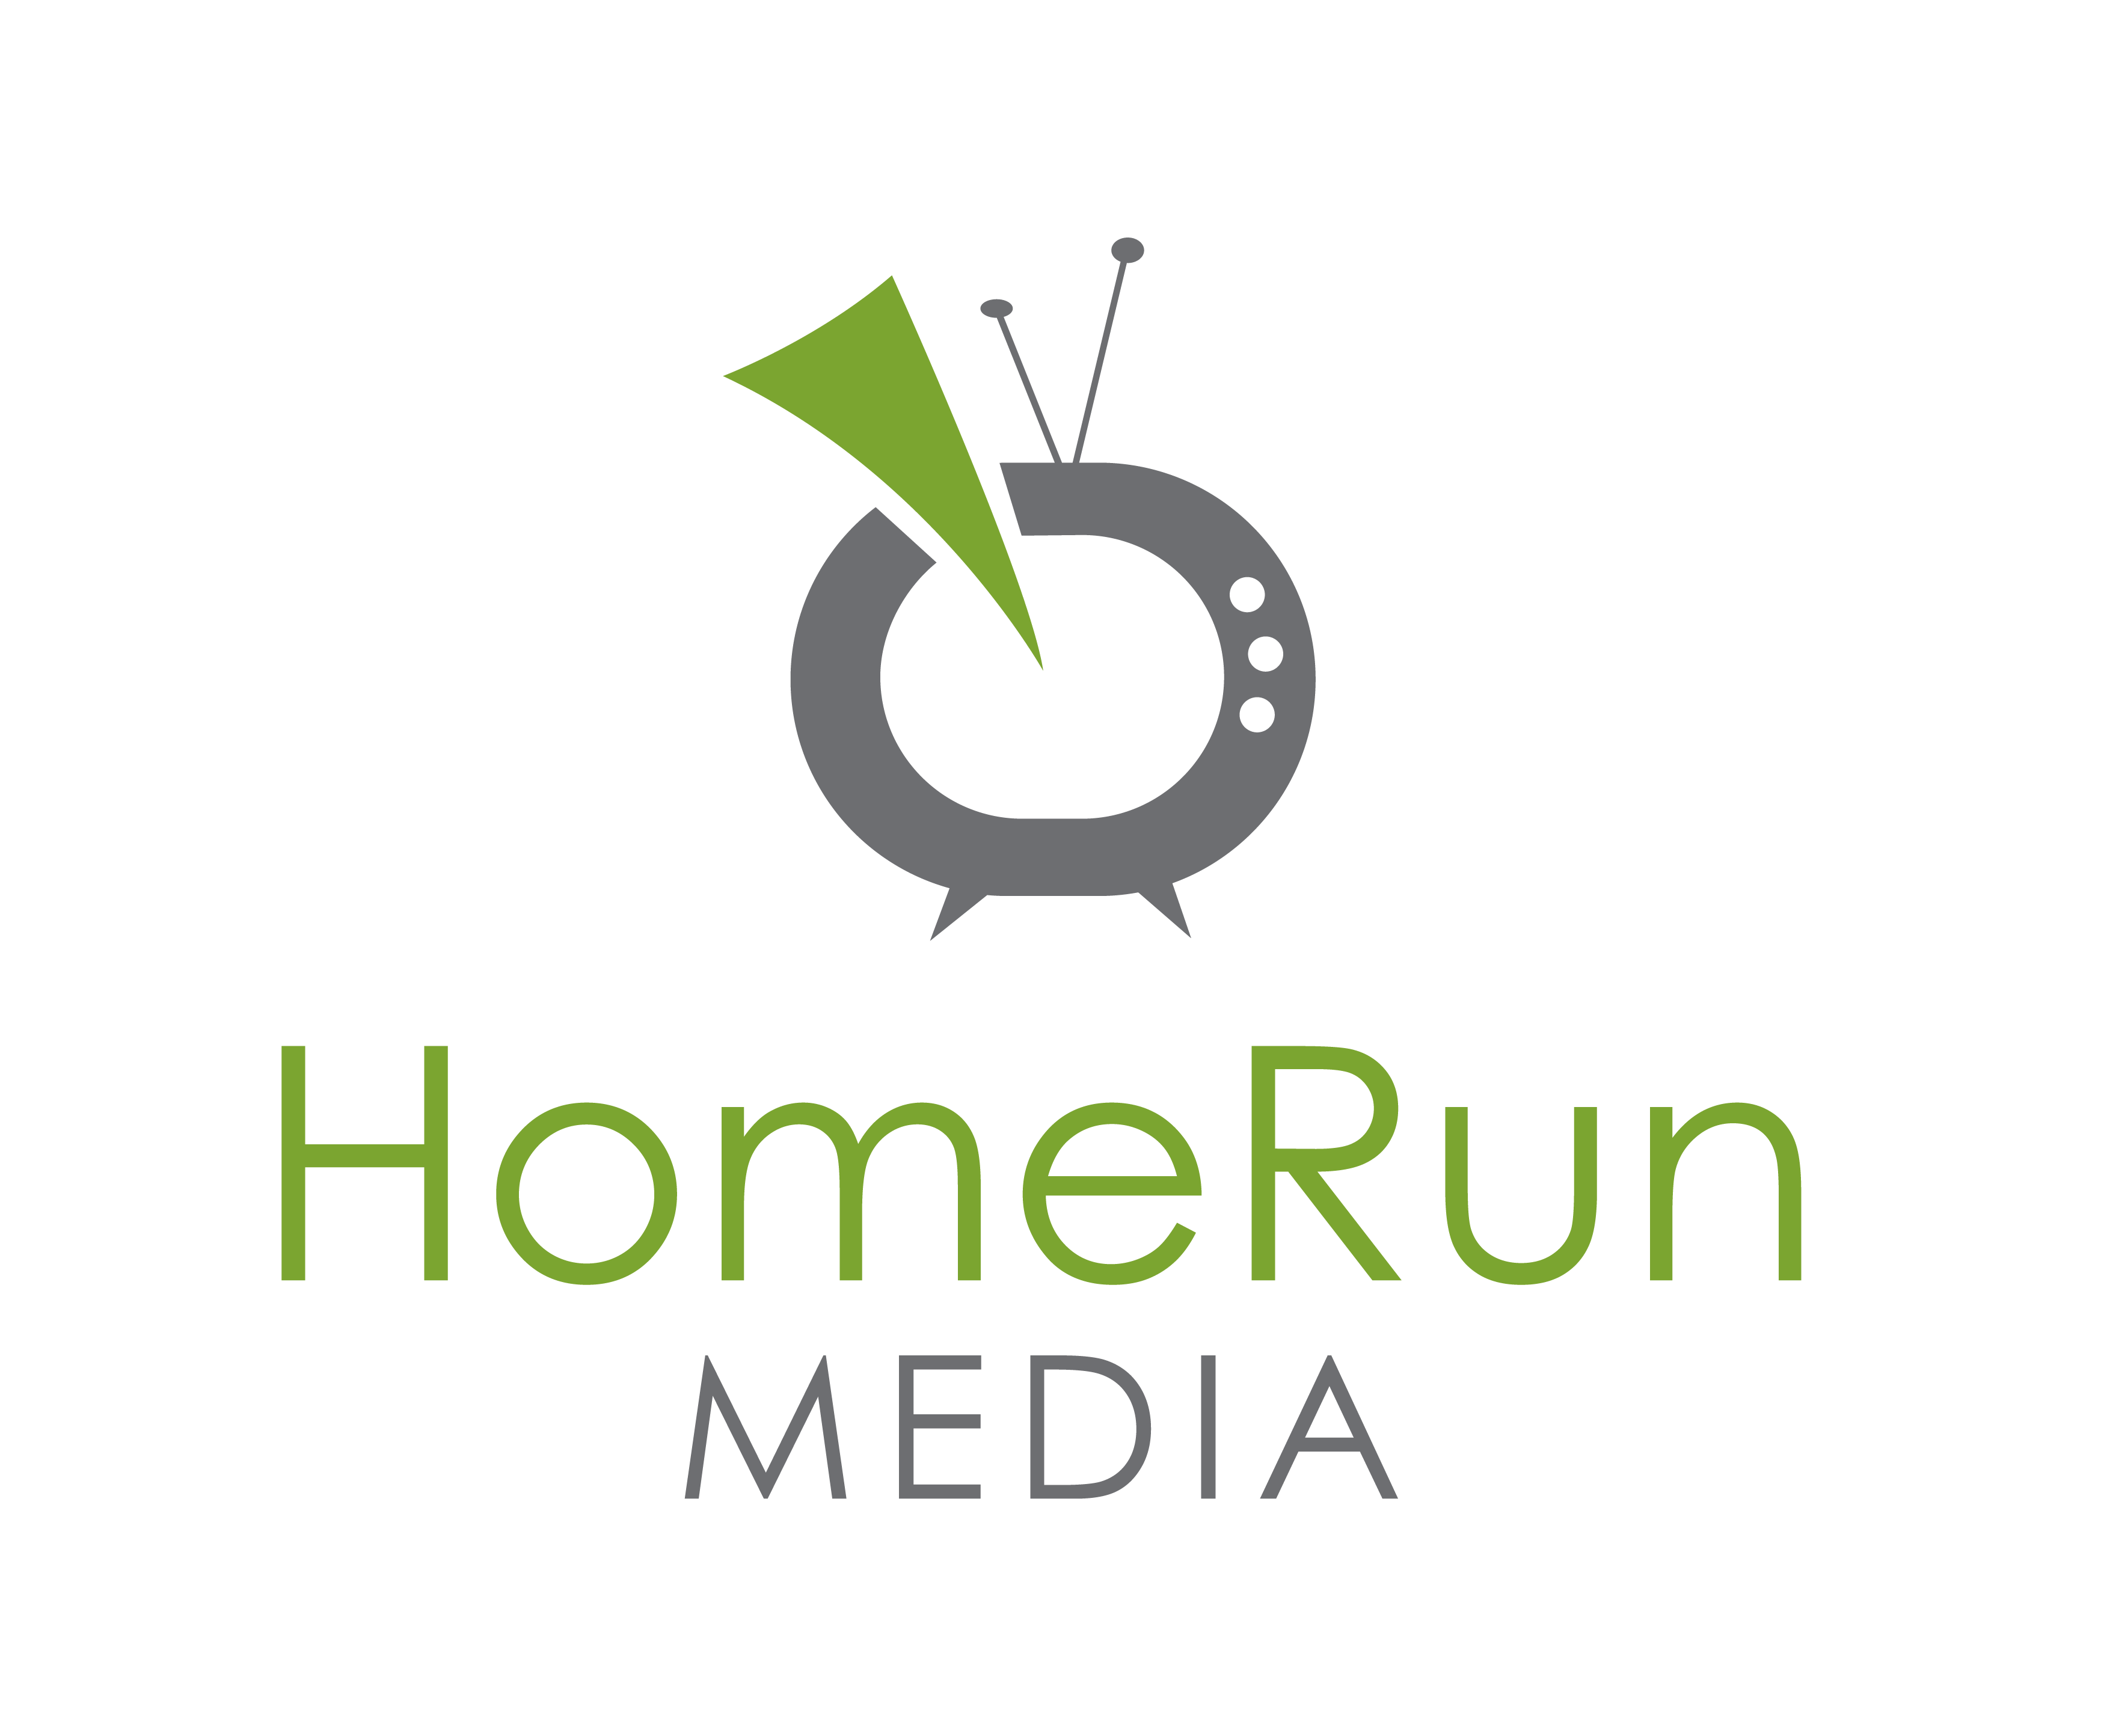 Home Run Media